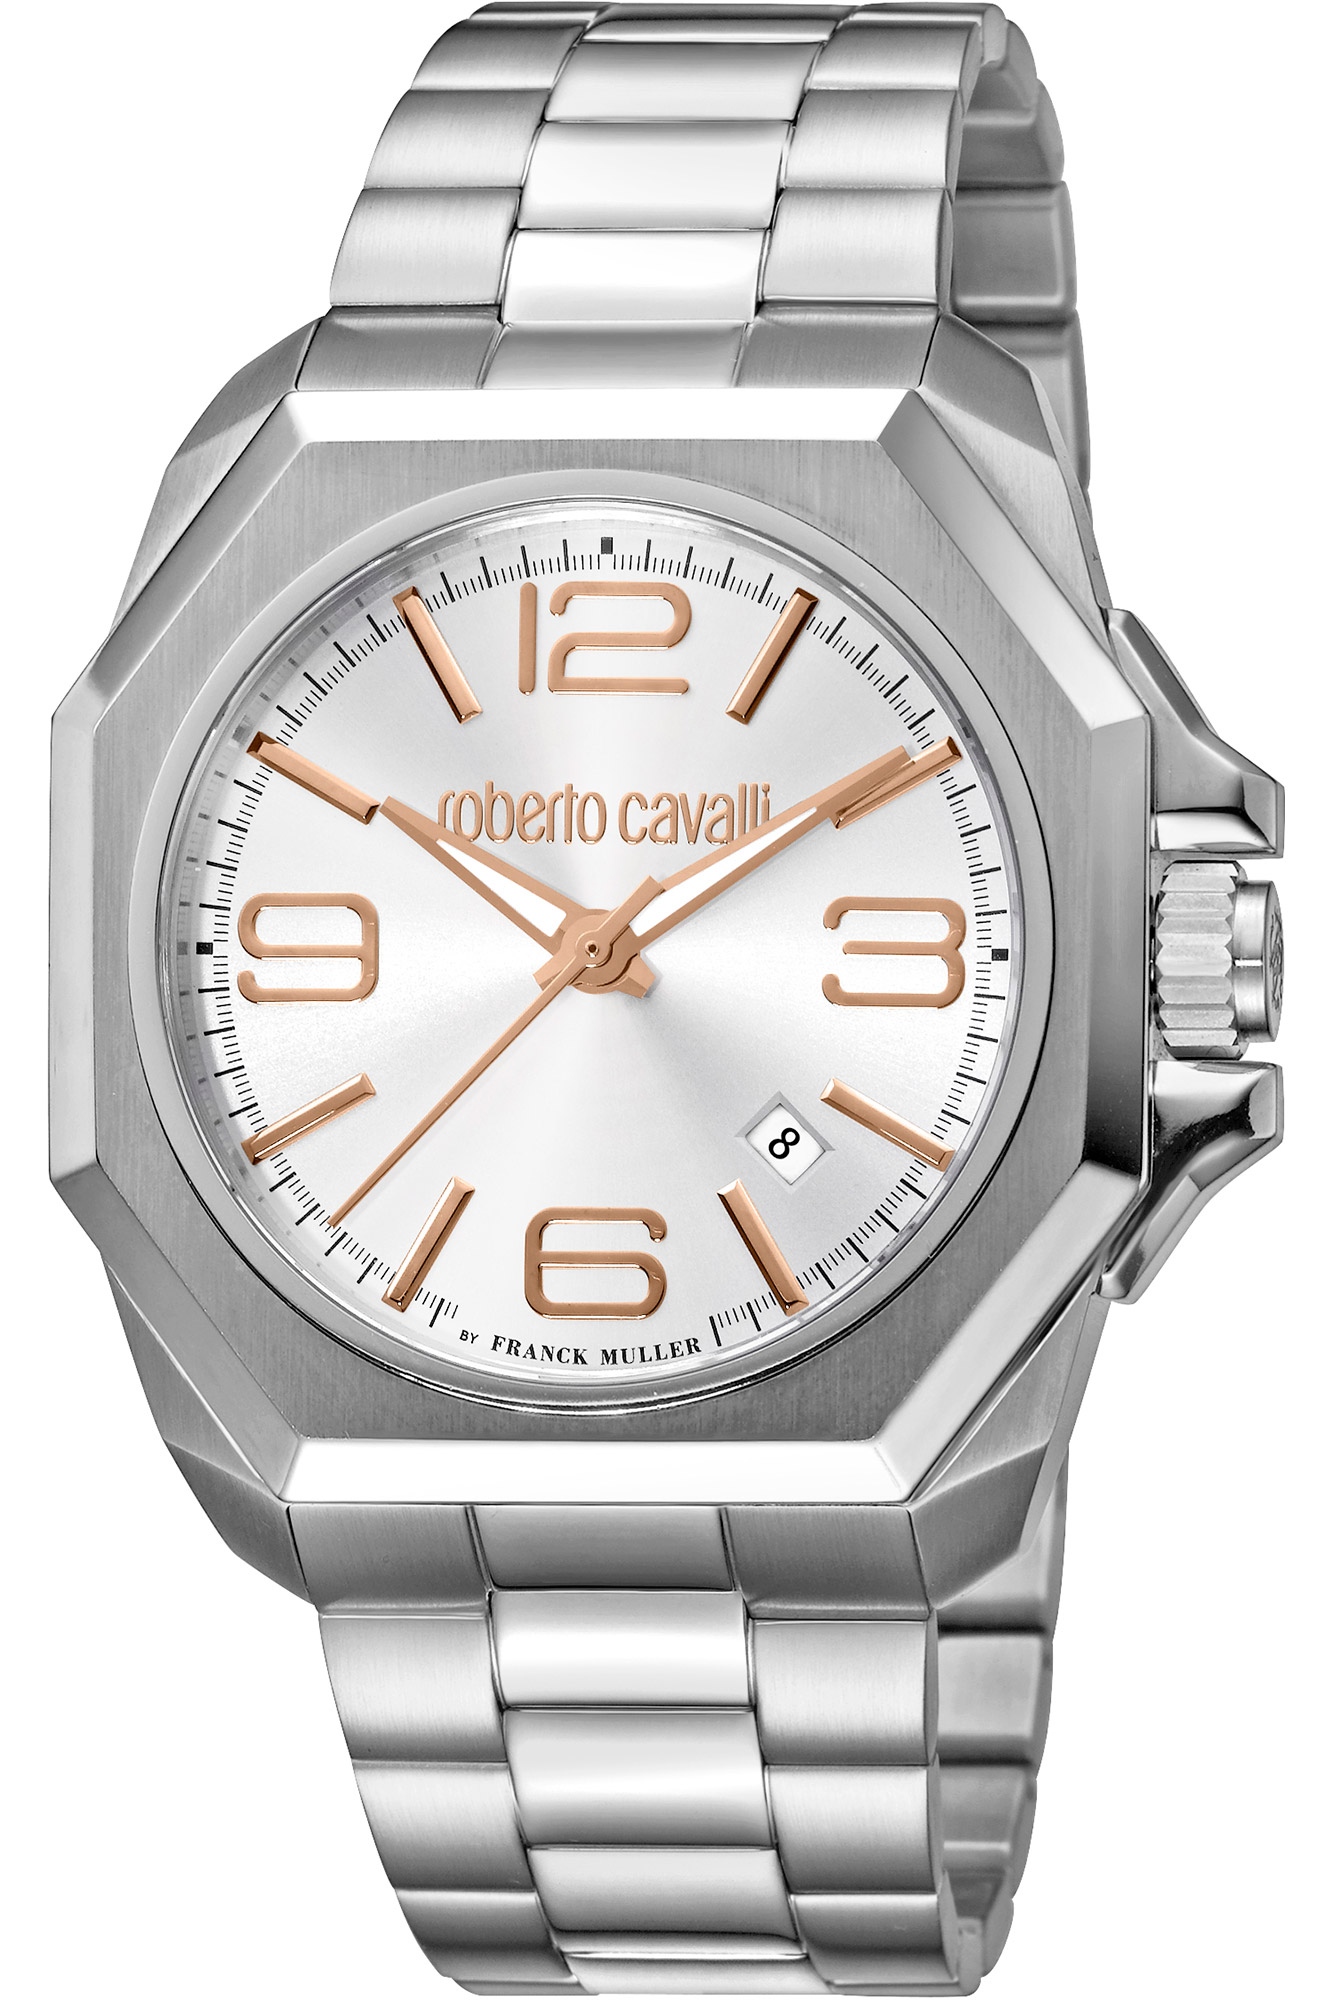 Watch Roberto Cavalli by Franck Muller rv1g076m0061